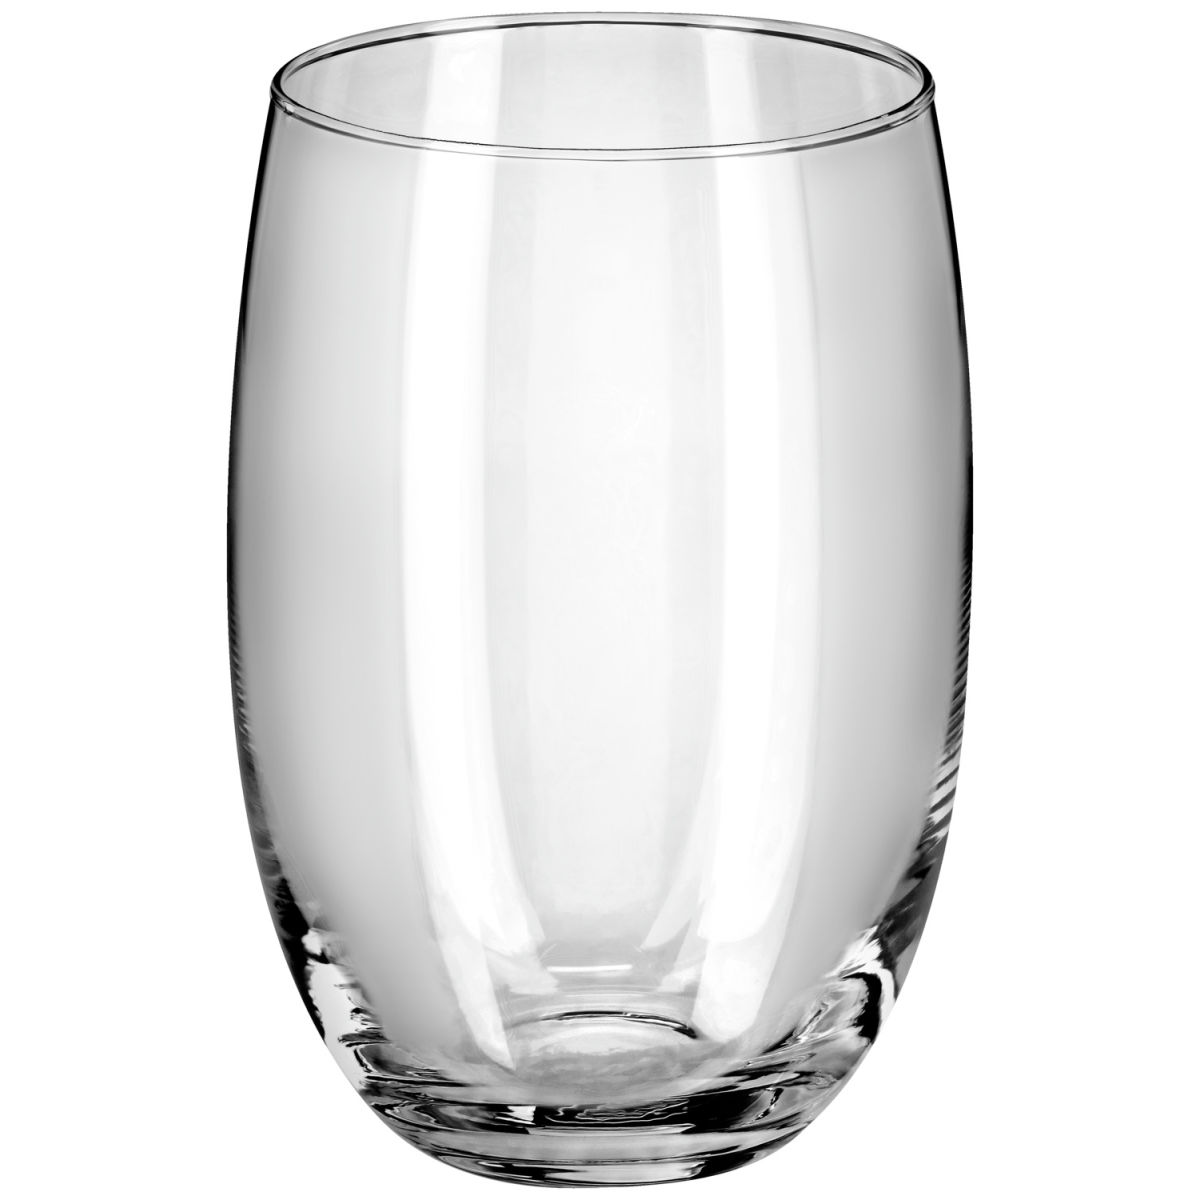 Krosno Longdrinkglas Blended; 510ml, 8x15 cm (ØxH); transparant; 6 stuk / verpakking